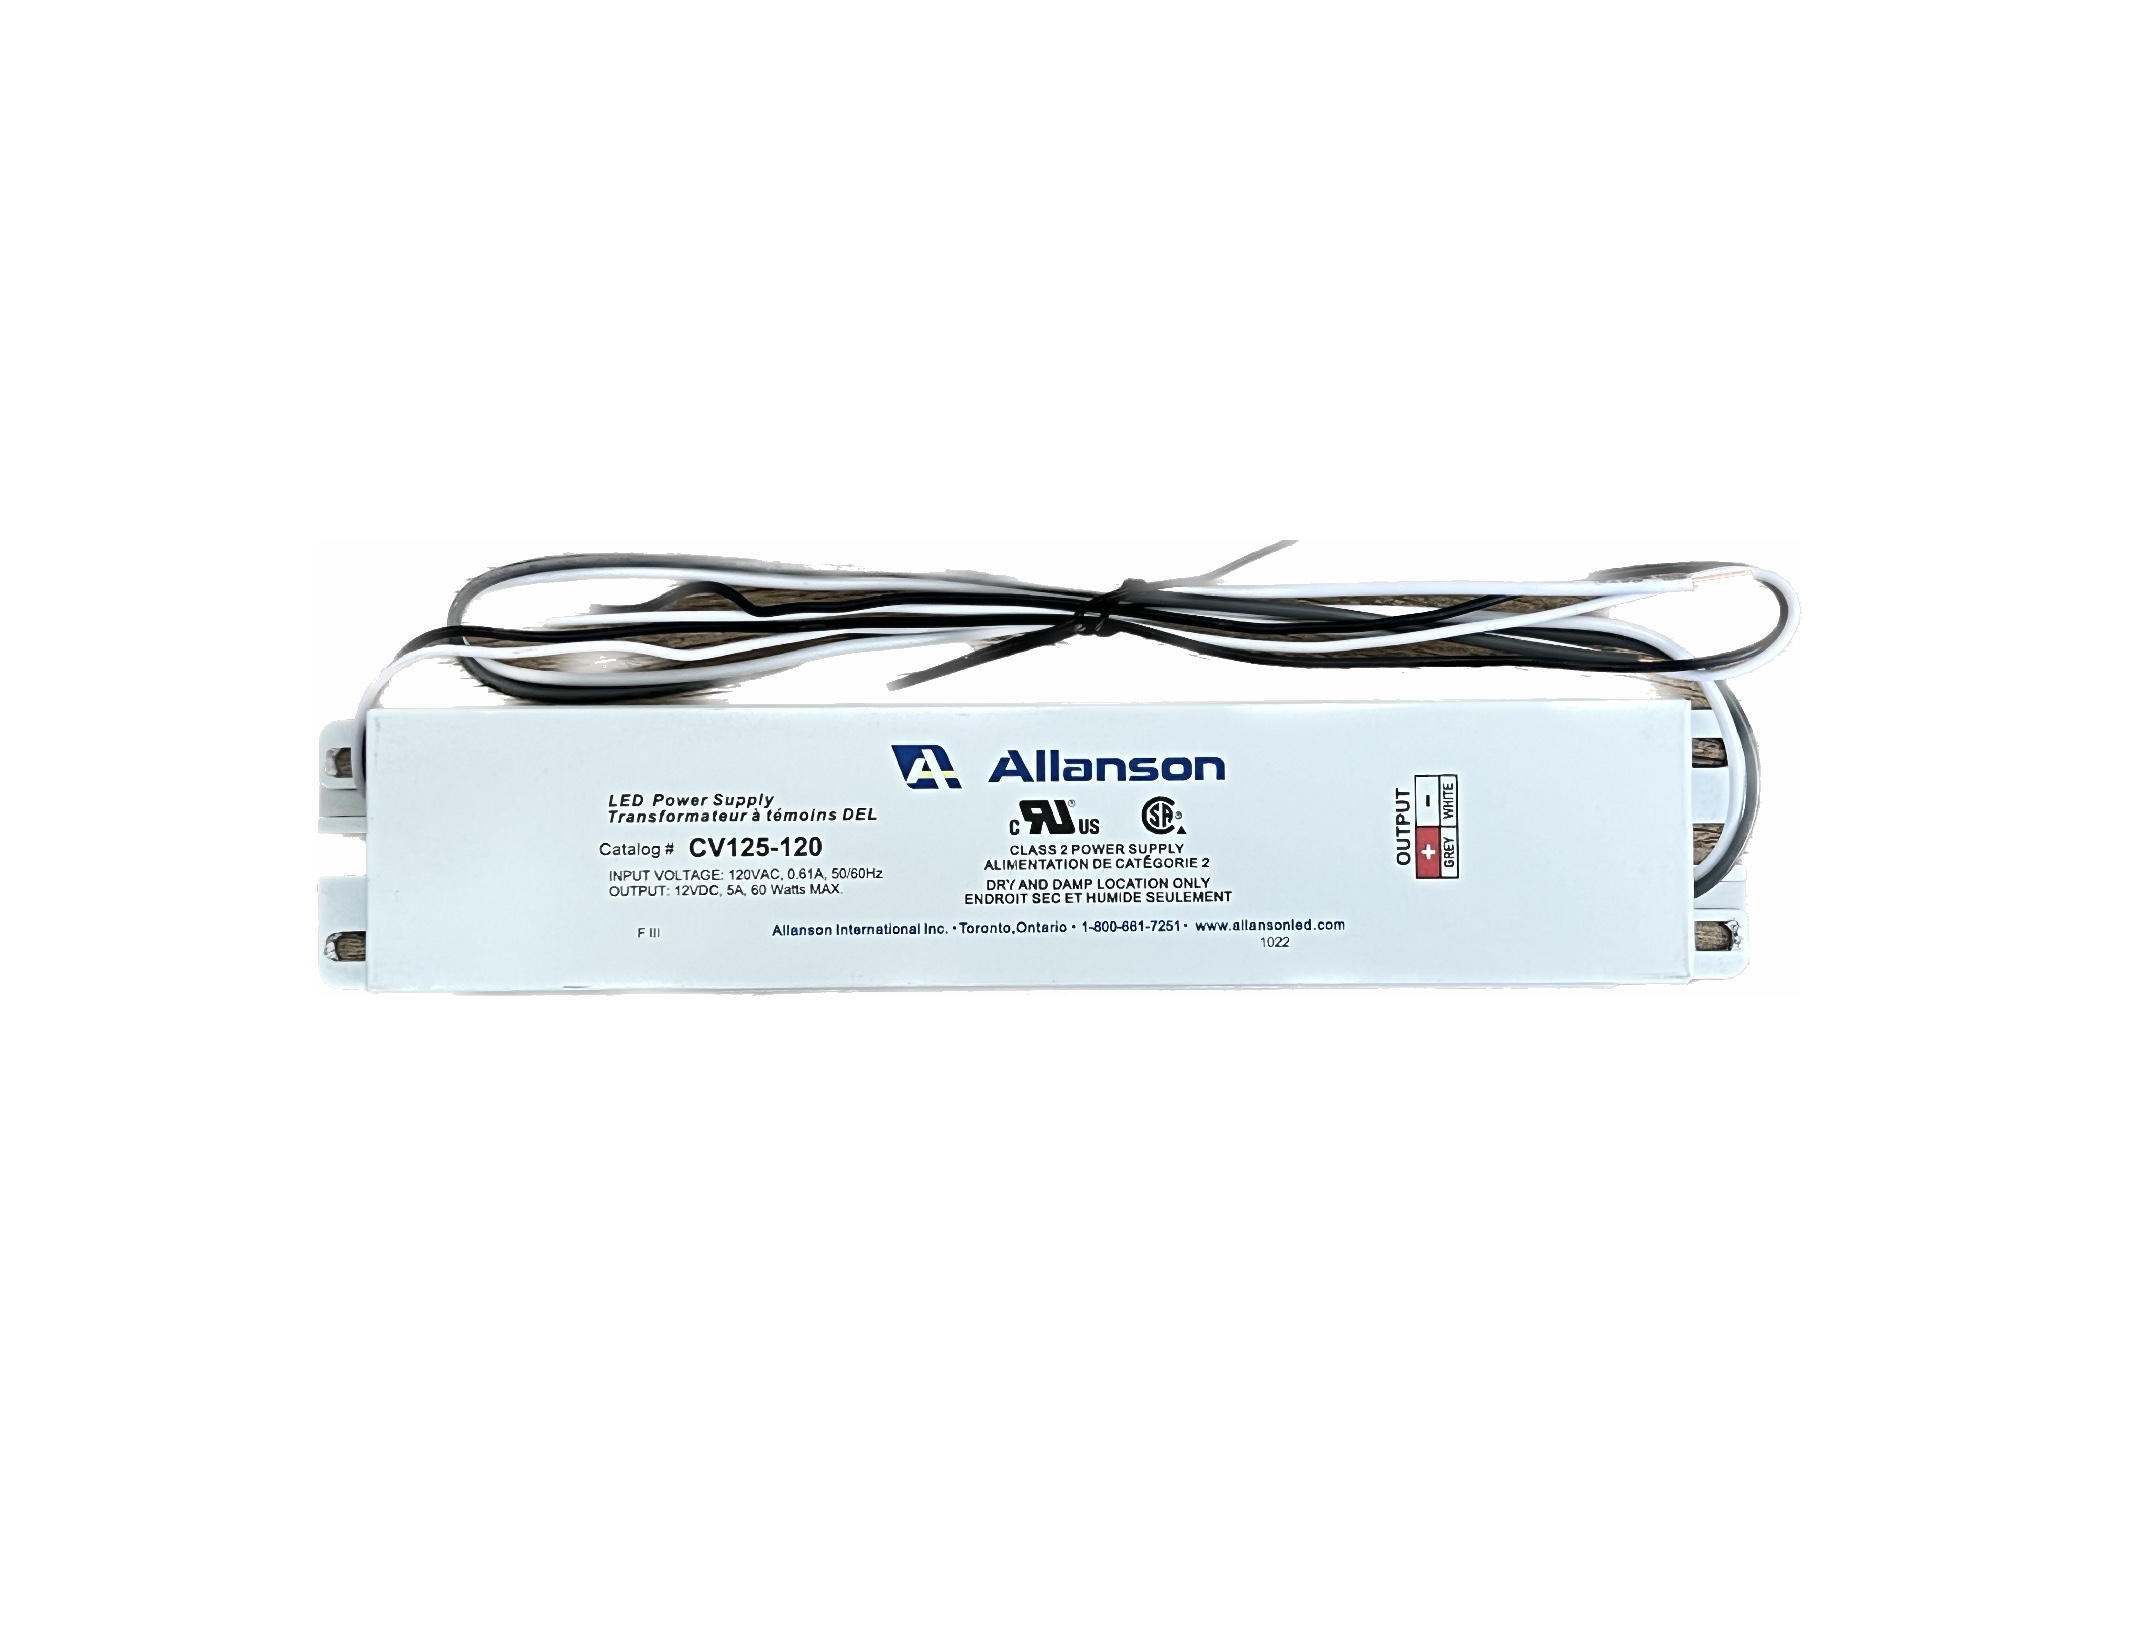 Allanson LED Power Supply 3